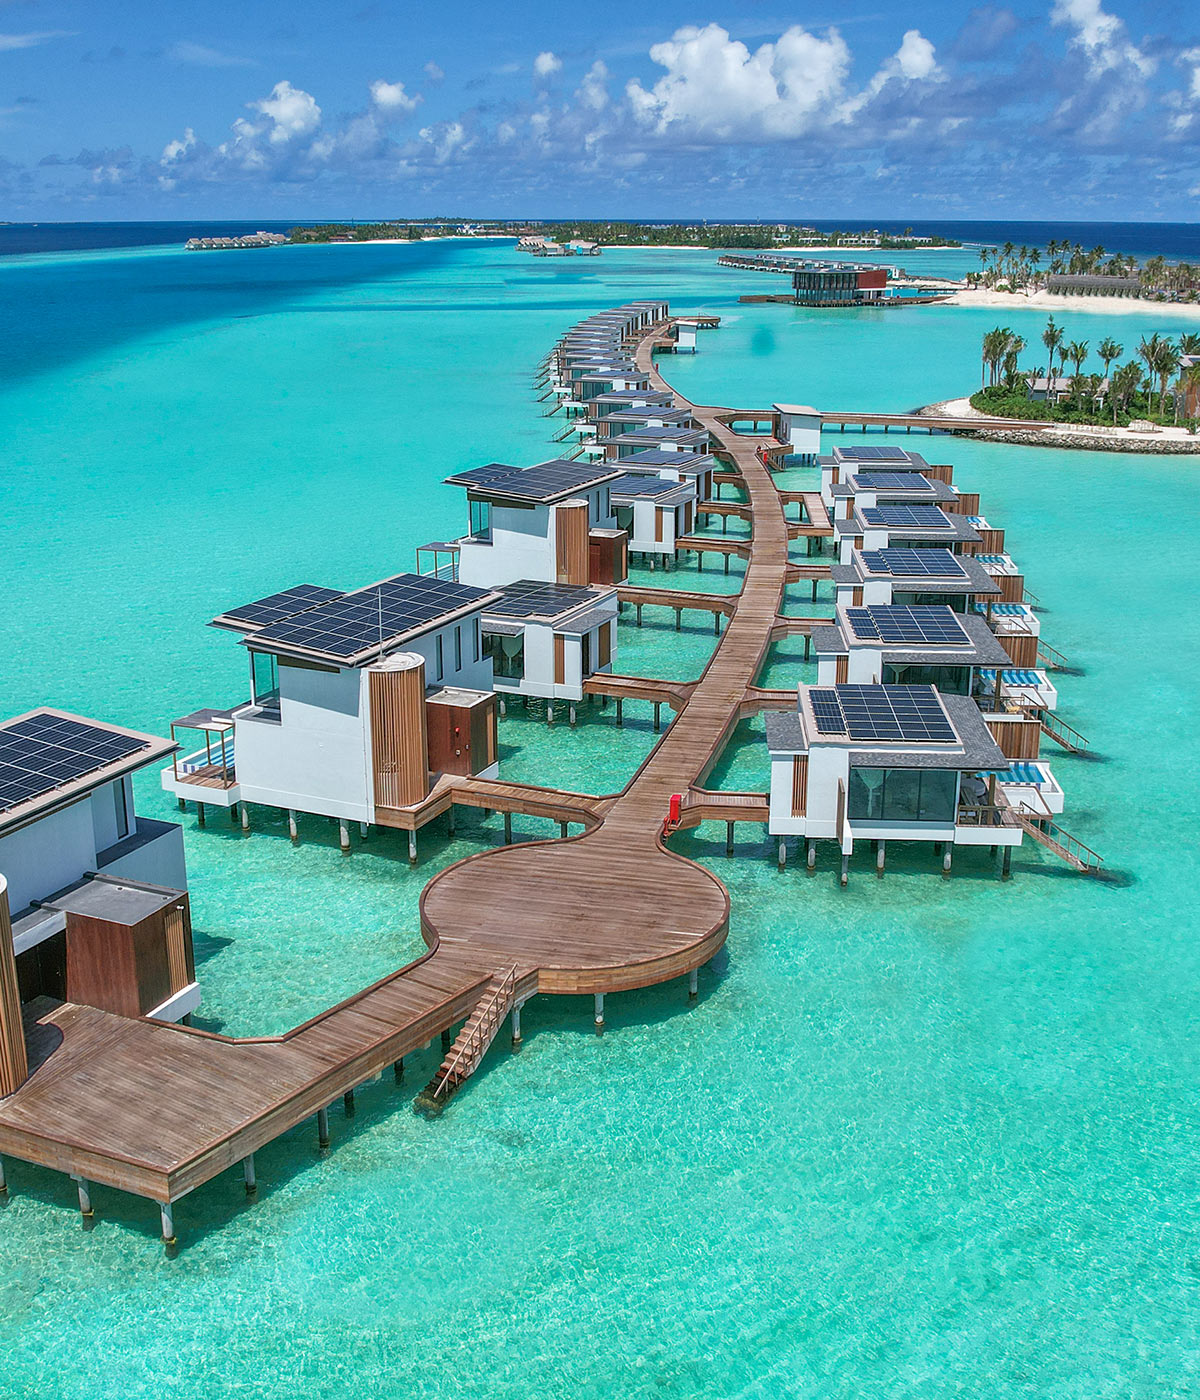 Villas arranged along a snaking wooden pier out across the blue tropical water